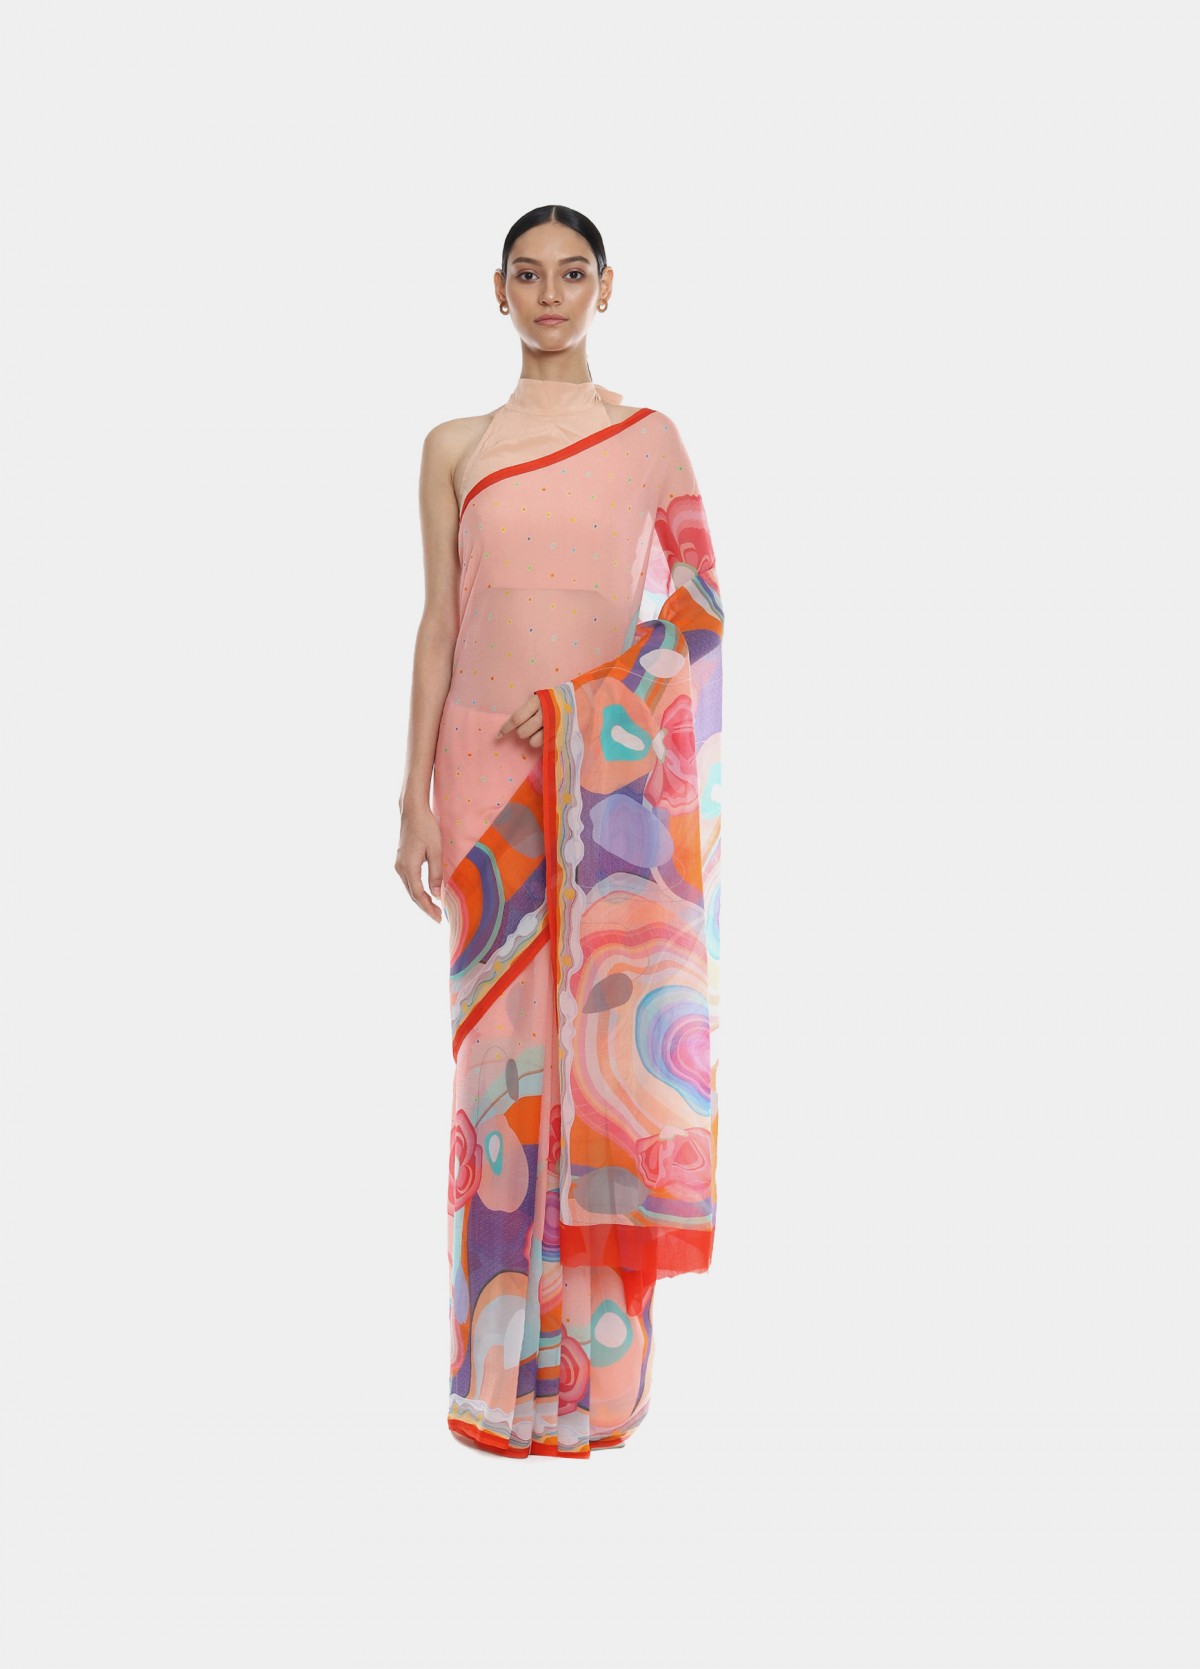 The Poppy Garden Sari